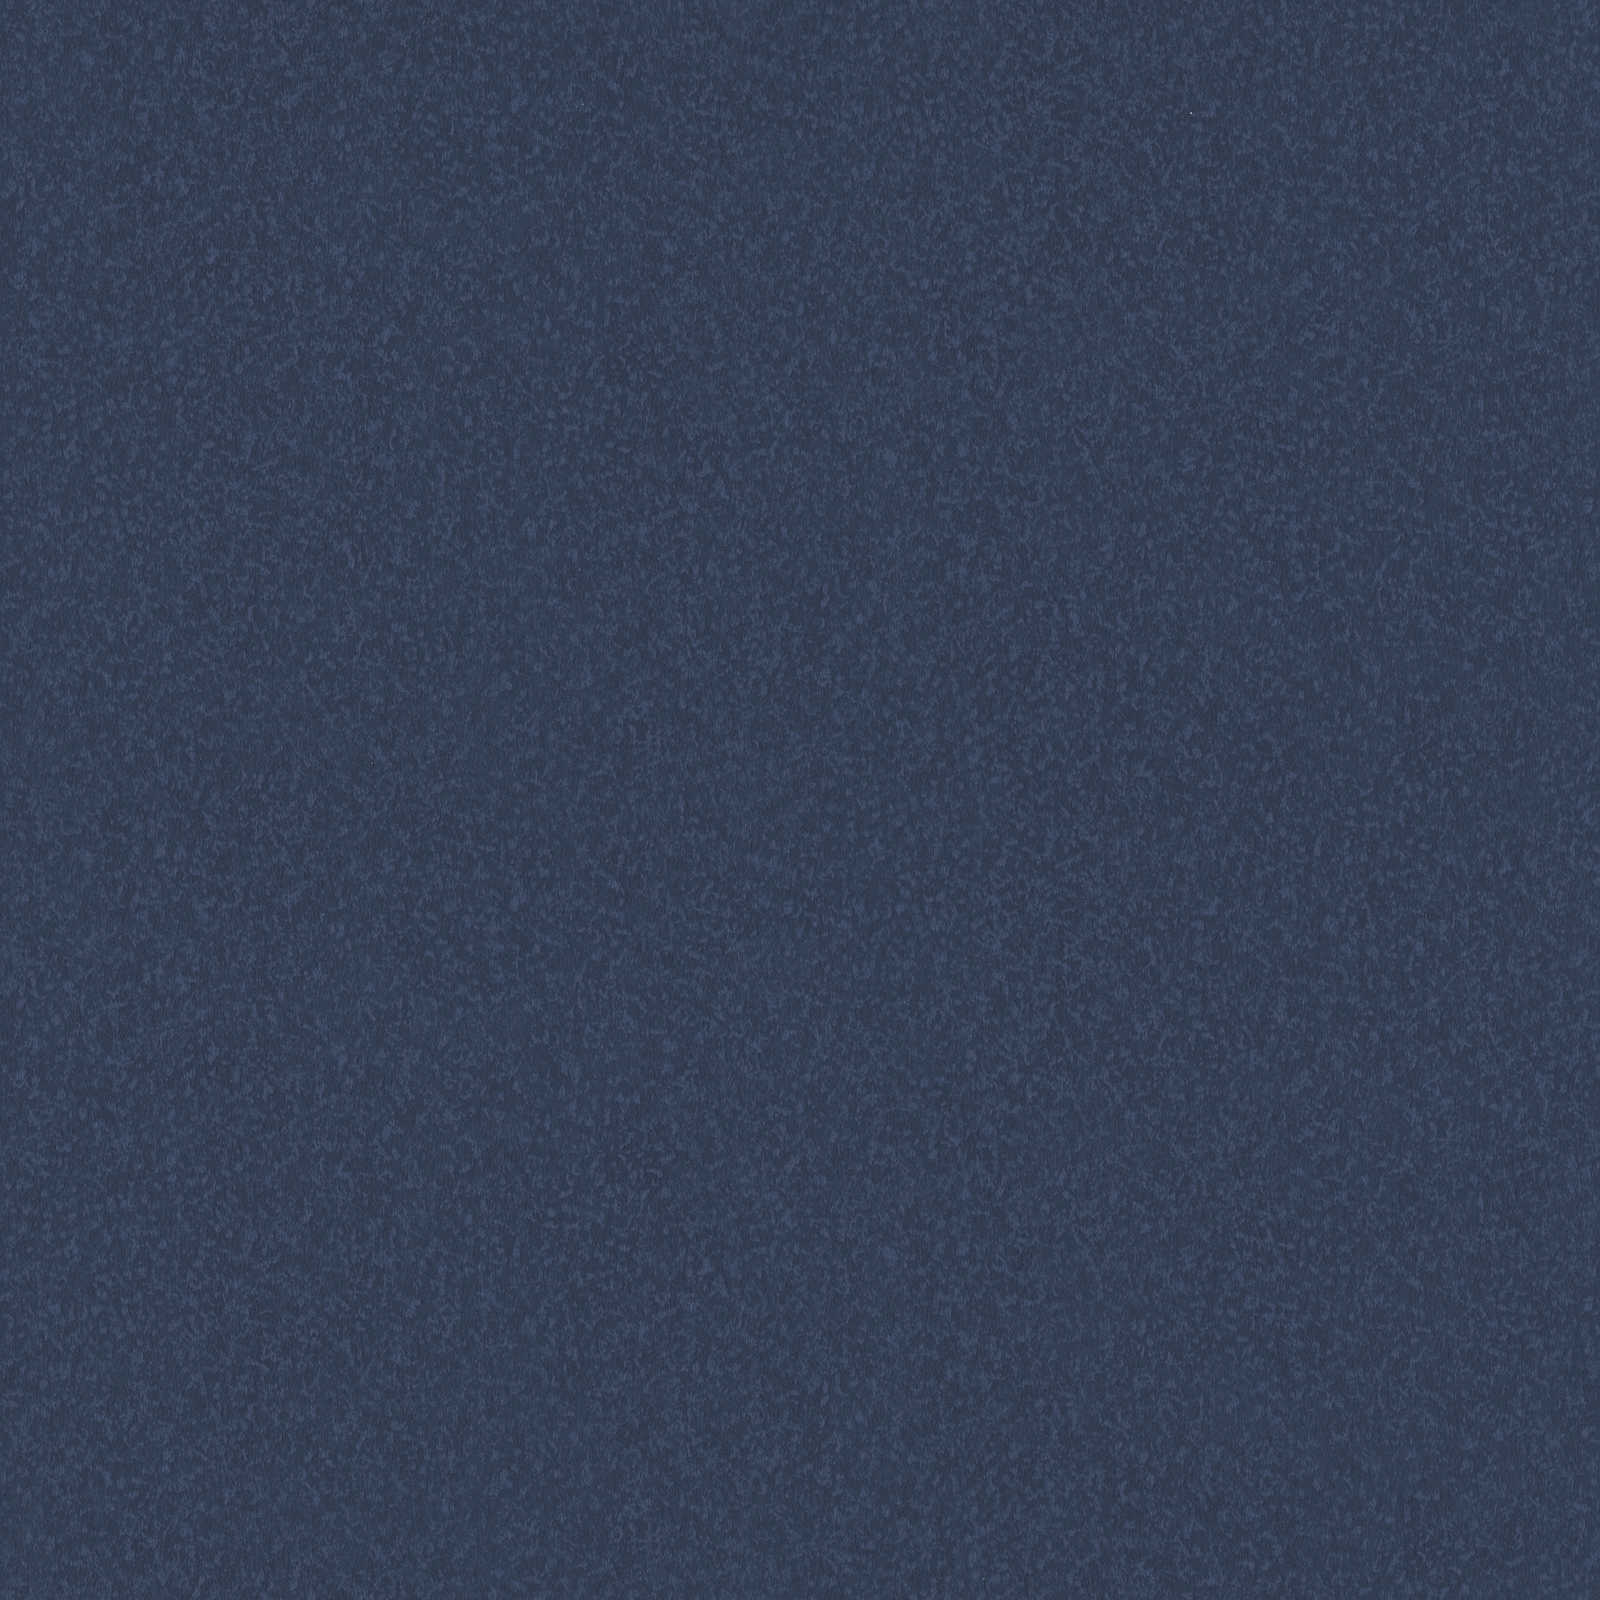         Plain paper wallpaper glossy - blue
    